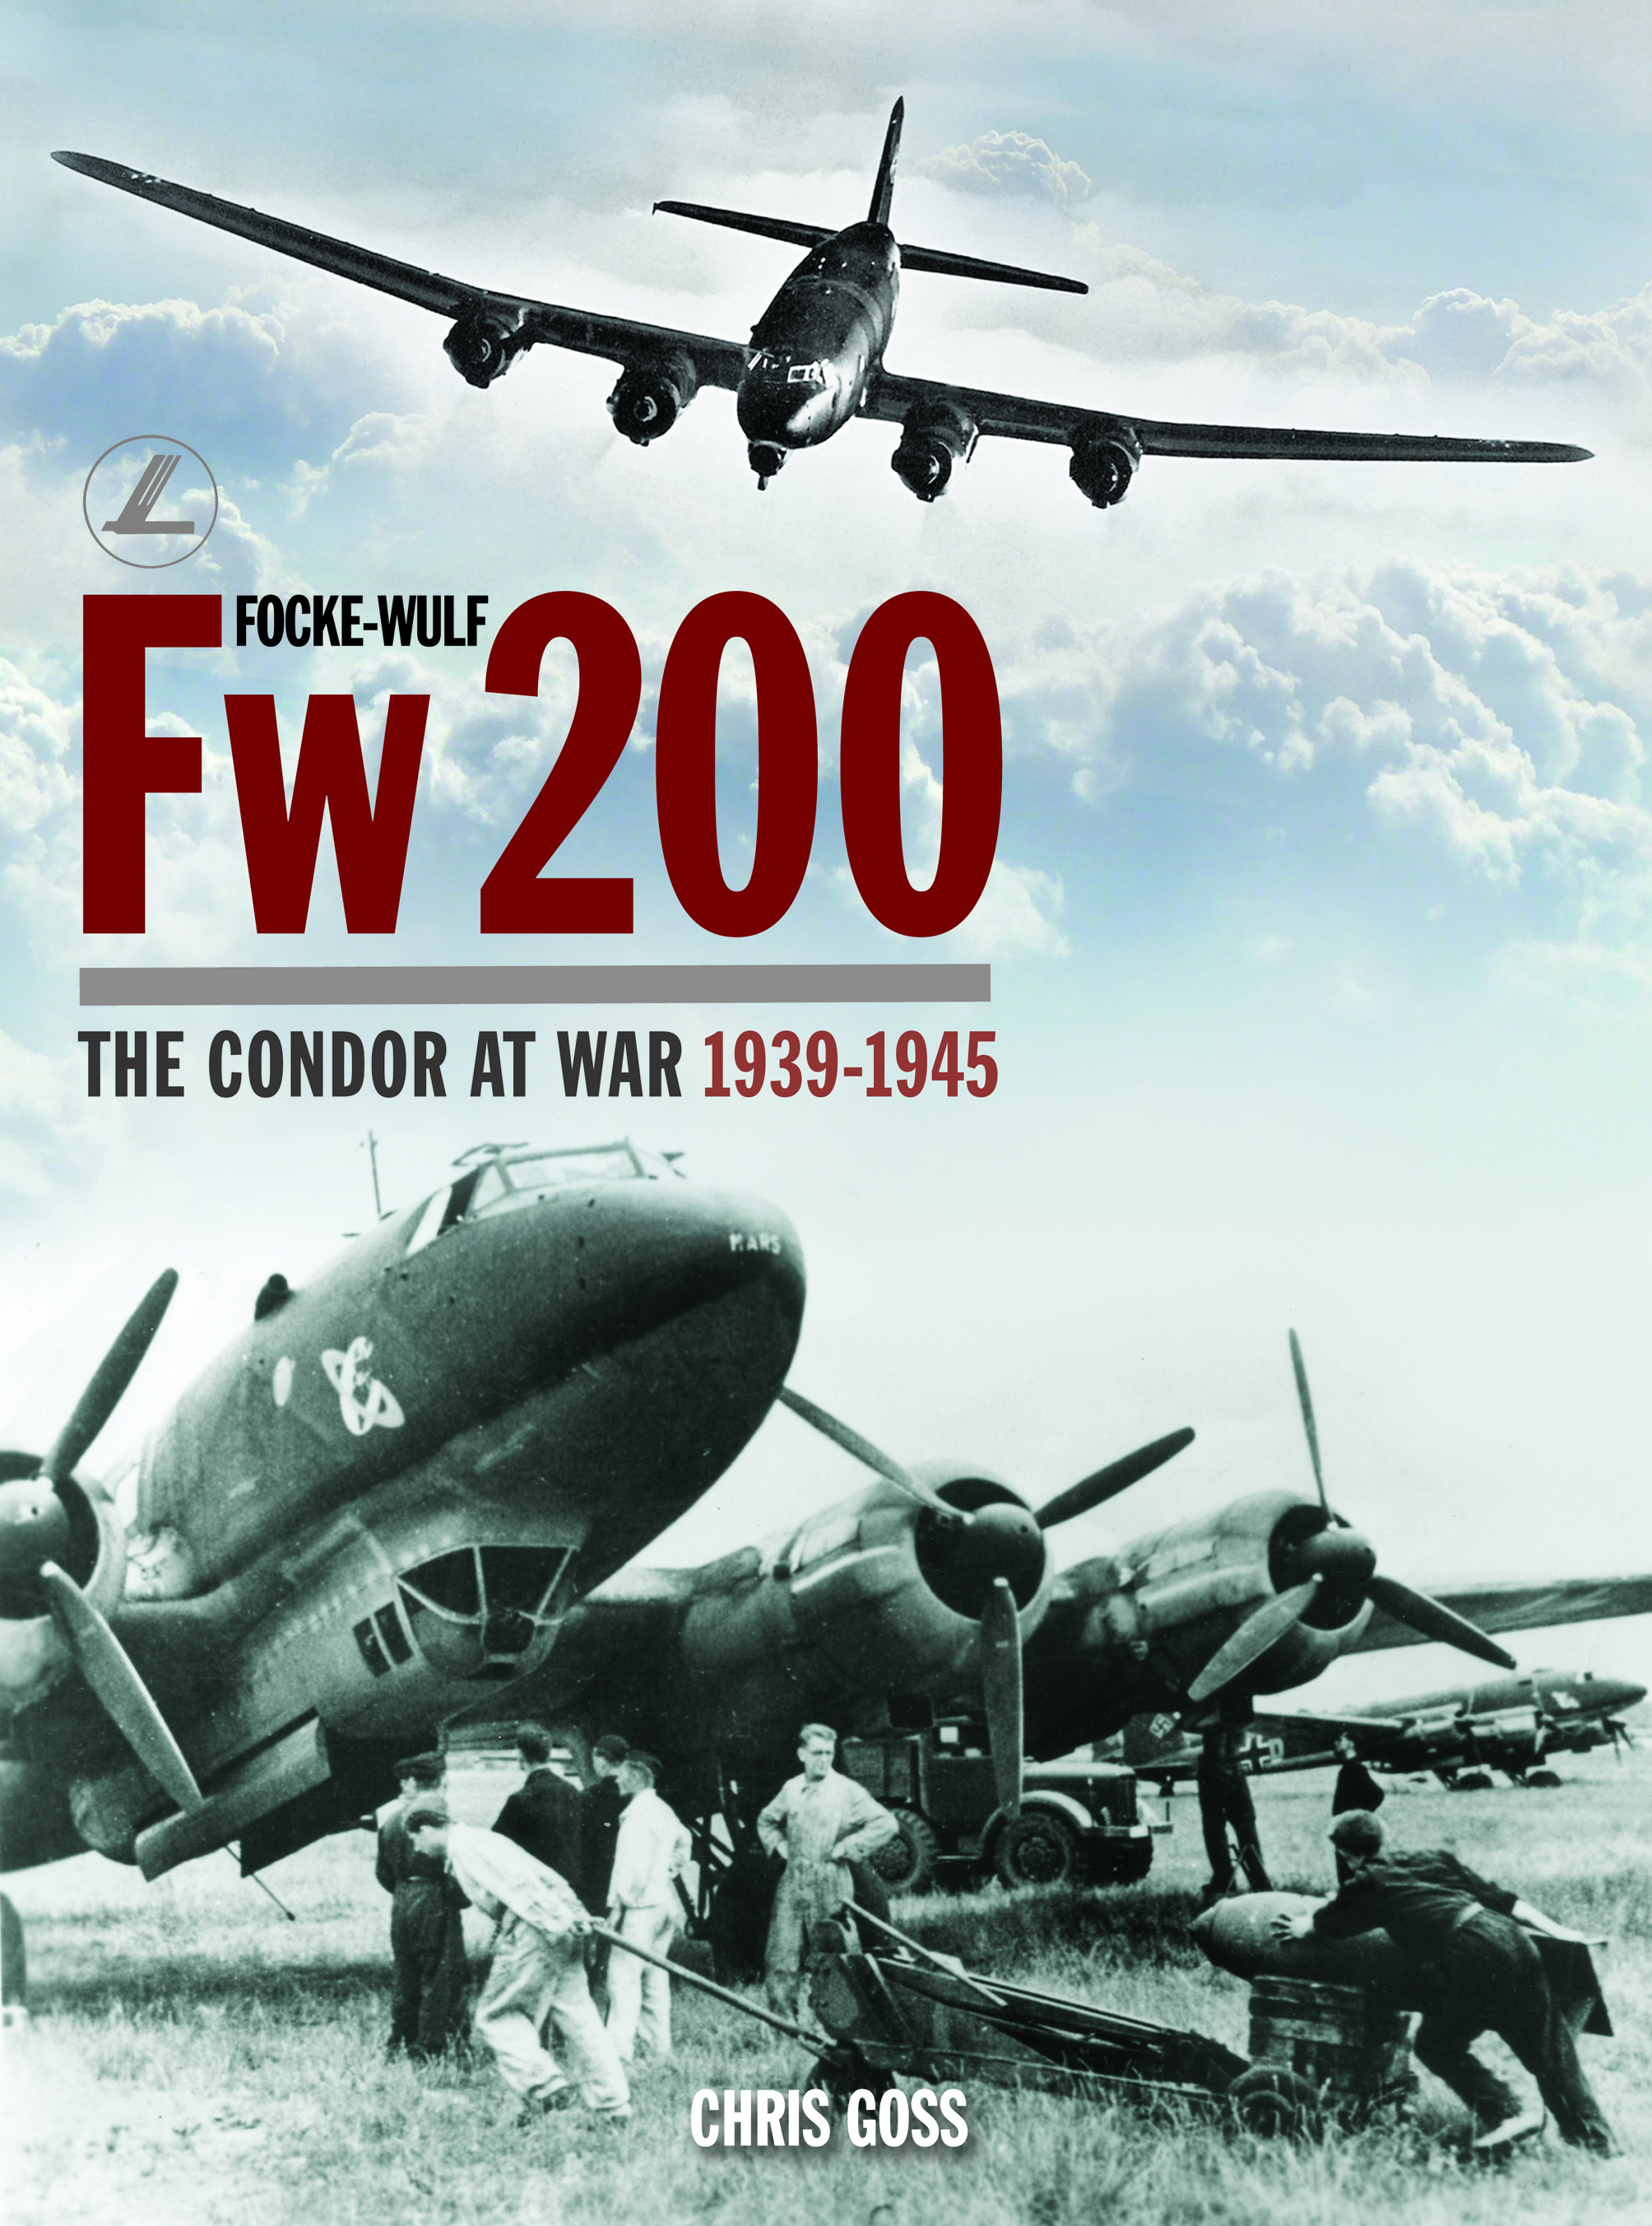 The Focke-Wulf Fw 200 The Condor at War 1939-1945